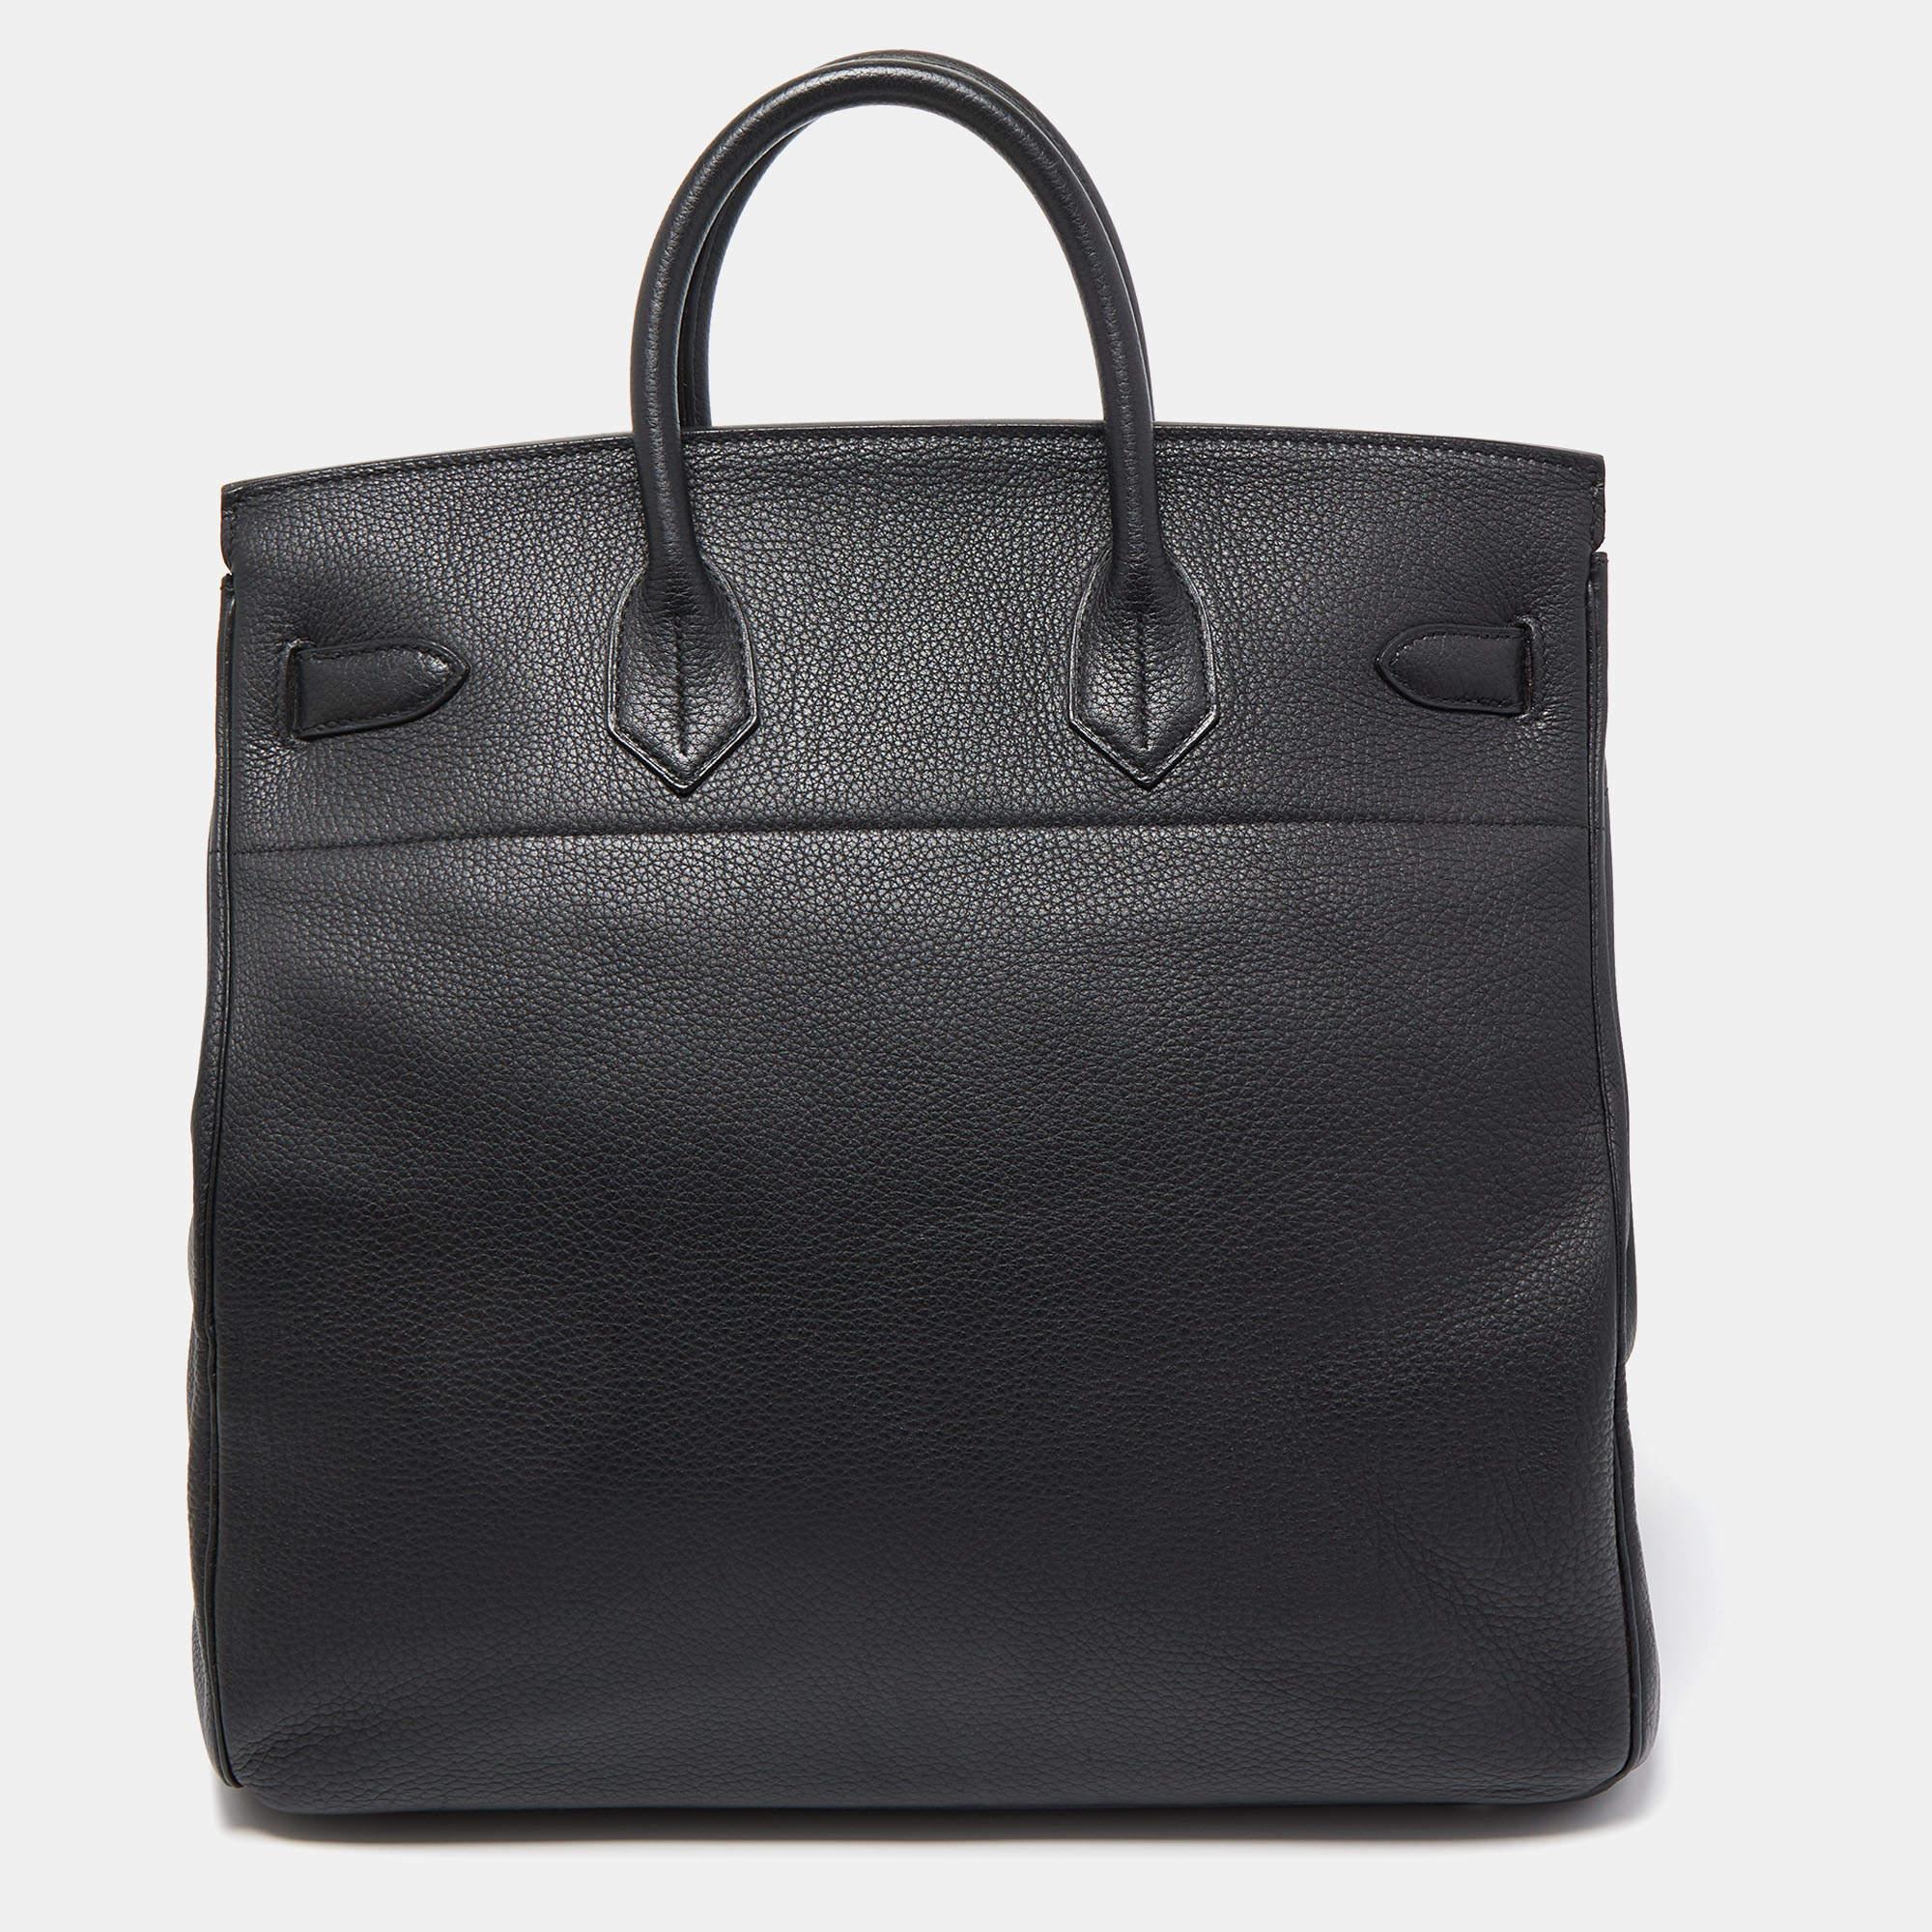 Hermes Black Togo Leather Palladium Plated HAC Birkin 40 Bag 1